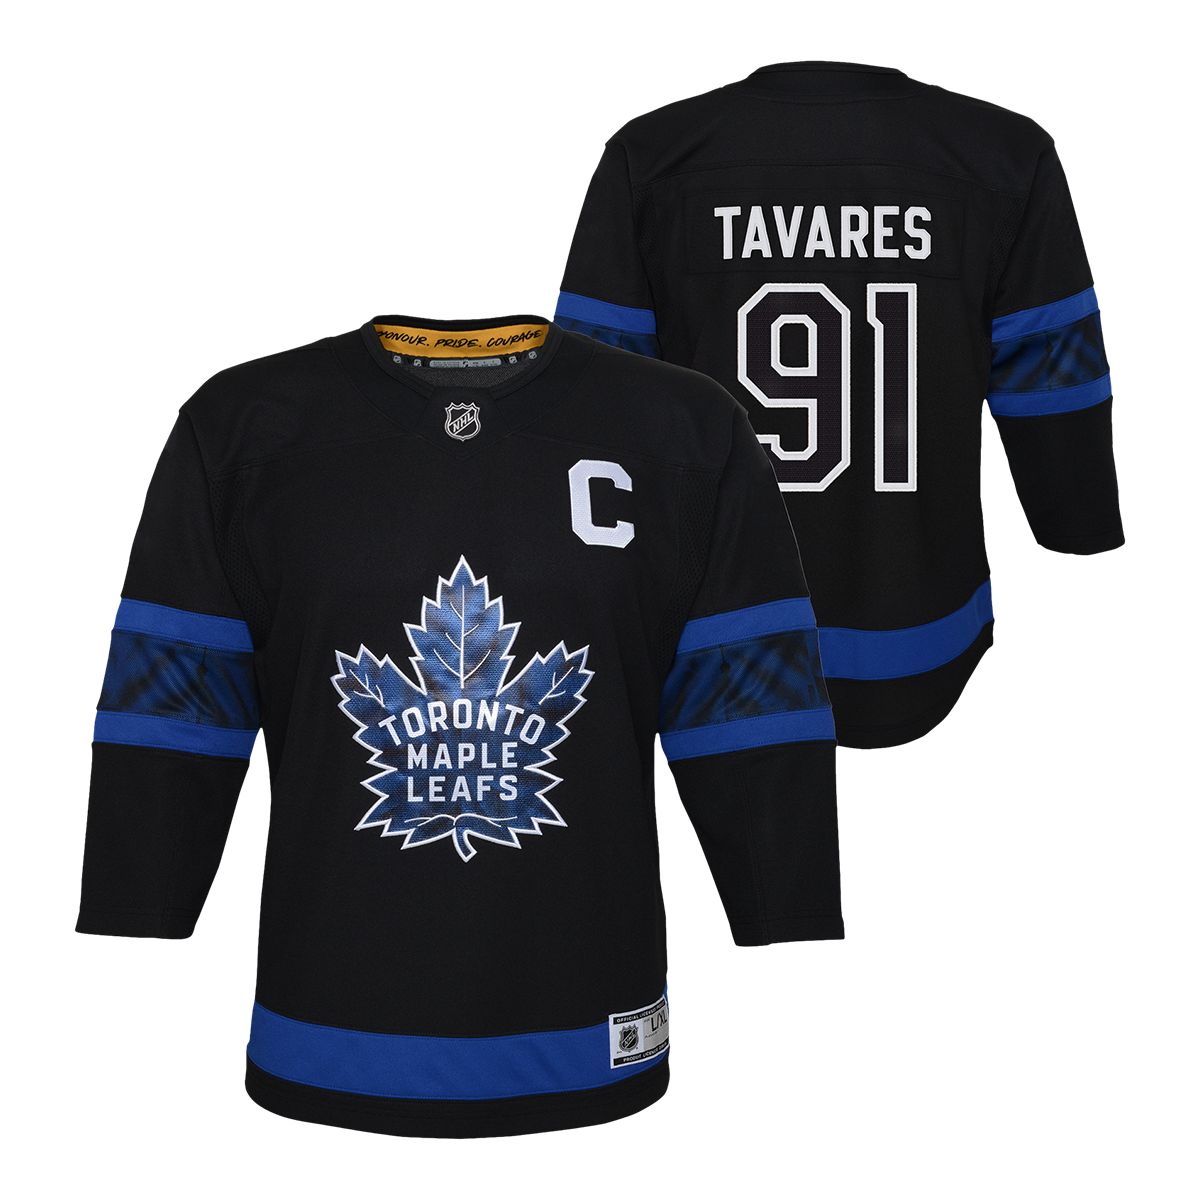 Toronto Maple Leafs to wear Justin Bieber-designed alternate